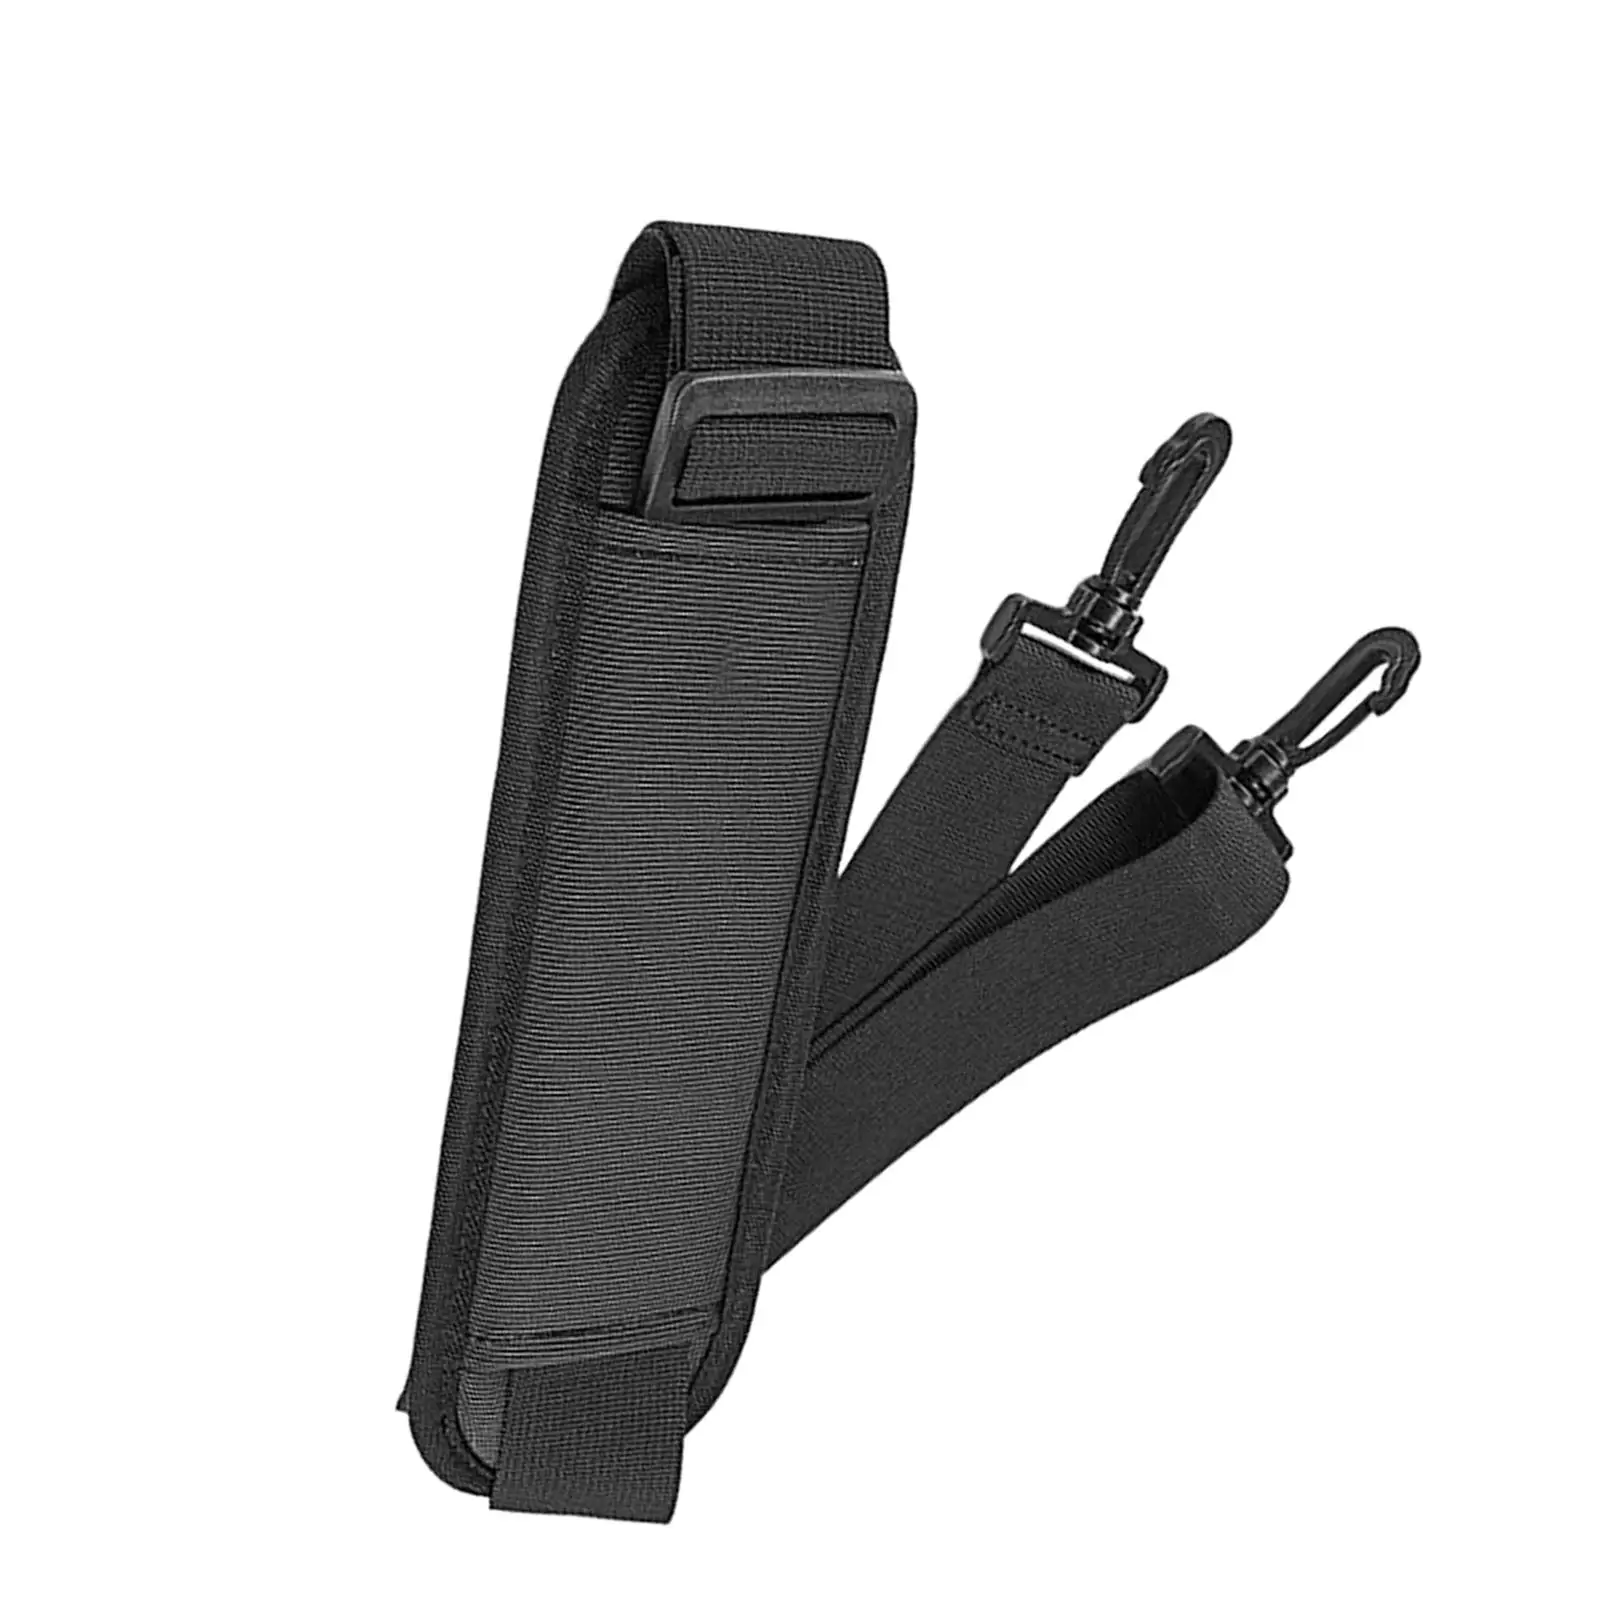 Shoulder Strap Adjustable Thick Carrying Strap Golf Bag Acce